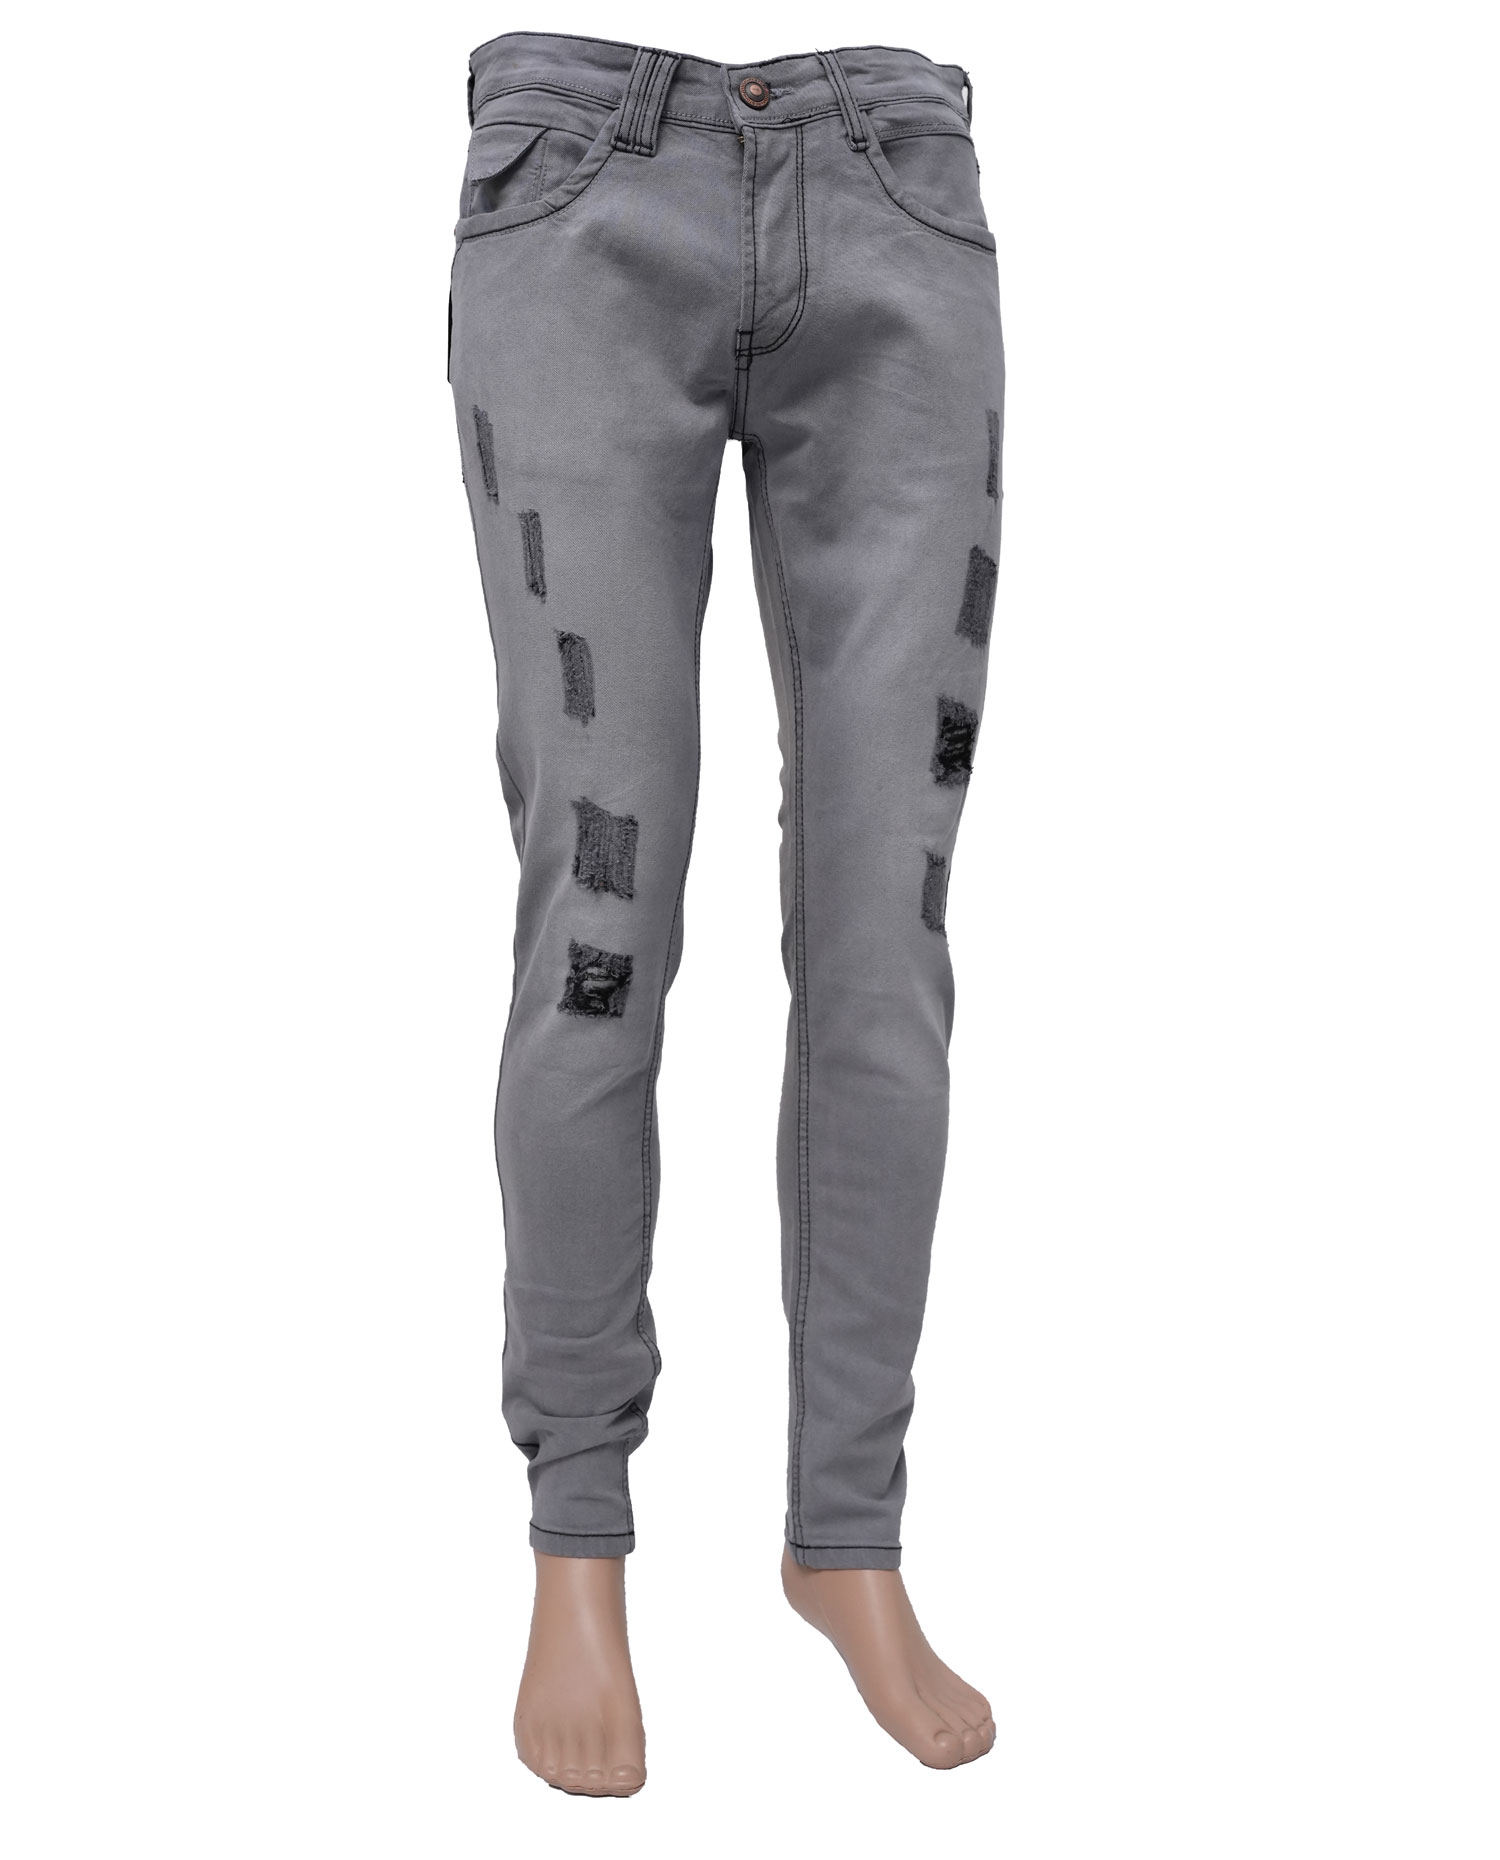 Denim Scratch Slim Fit Jeans for Men Stretchable Mens Pants, Dark Blue  Colour, 30W Size : Amazon.in: Fashion